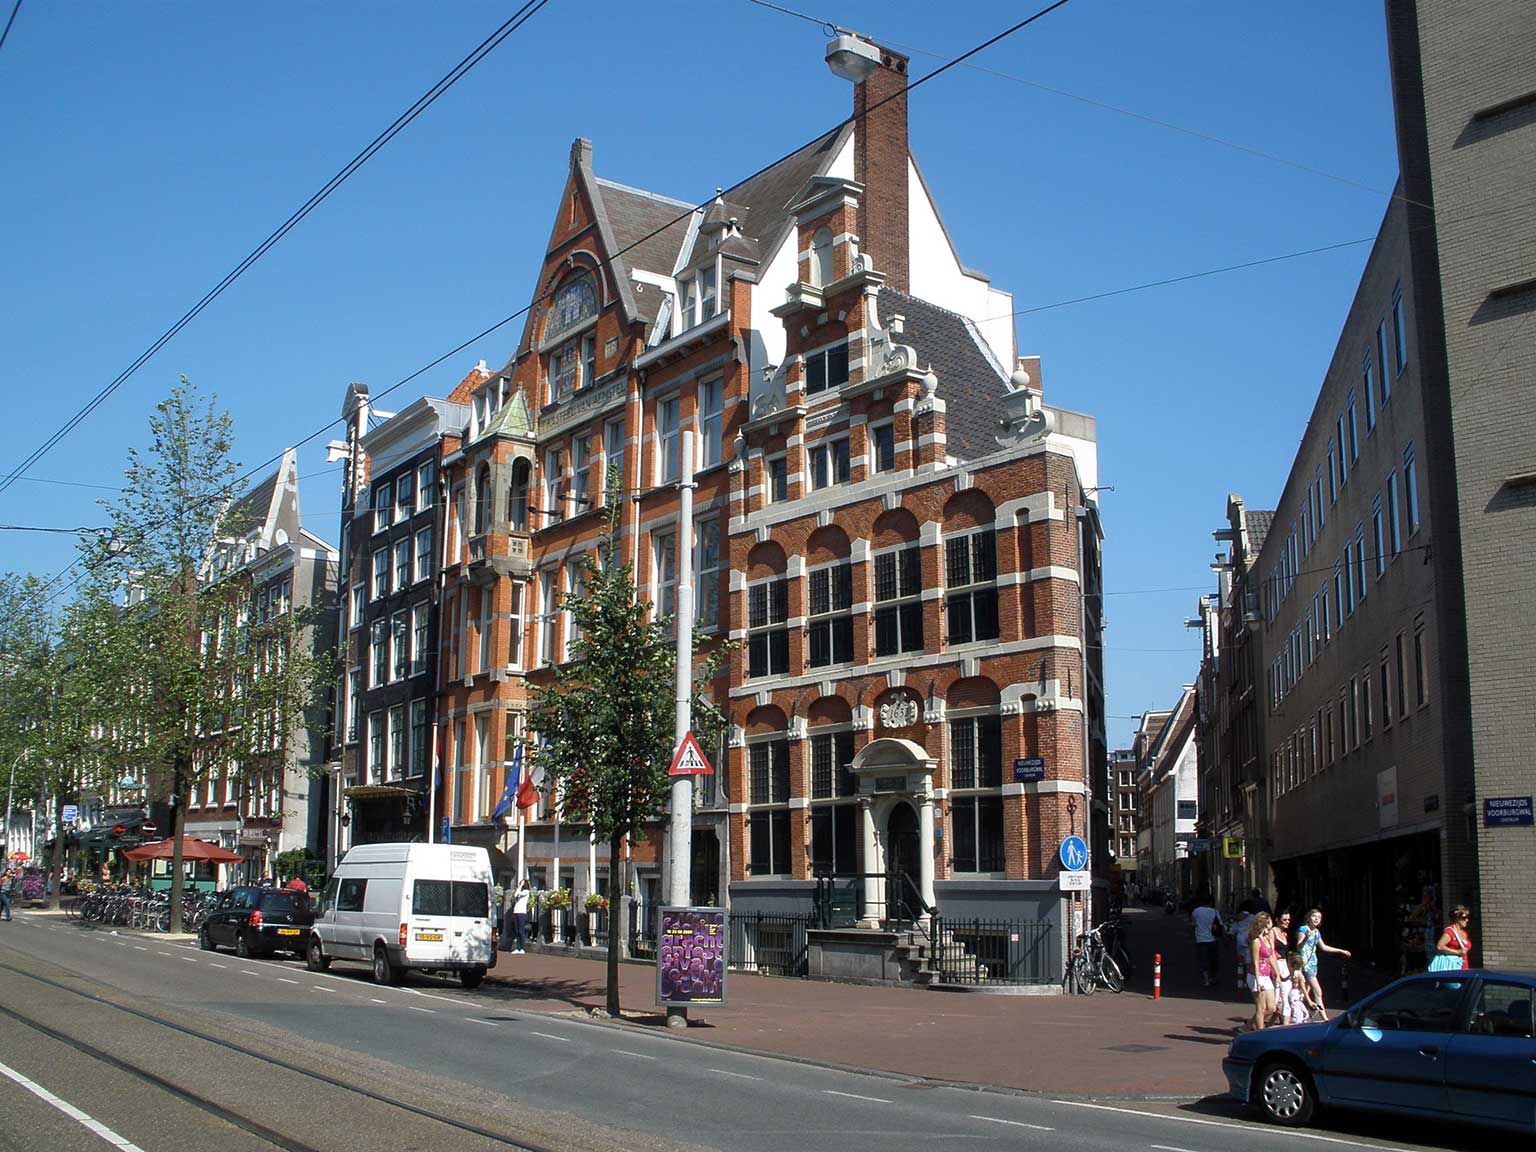 Makelaers Comptoir, Nieuwezijds Voorburgwal 75, Amsterdam